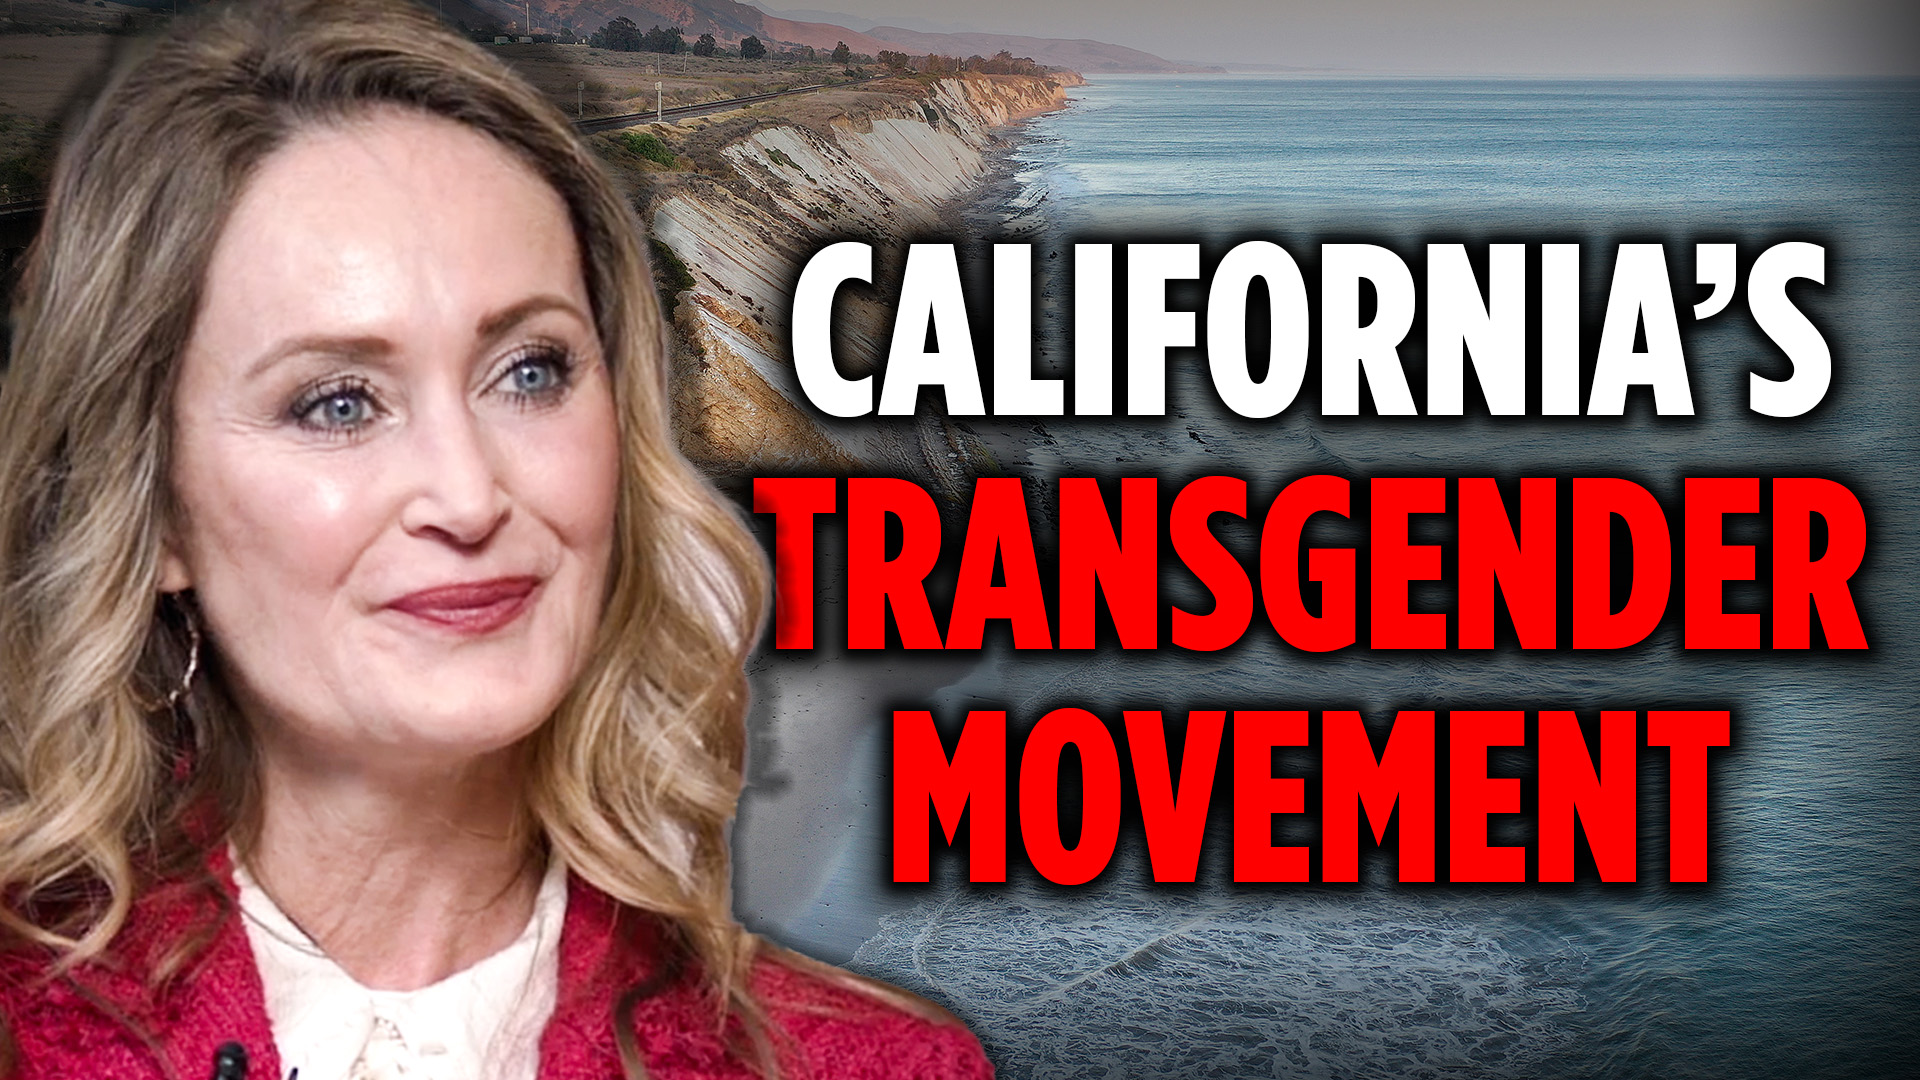 California's Transgender Movement Exposed